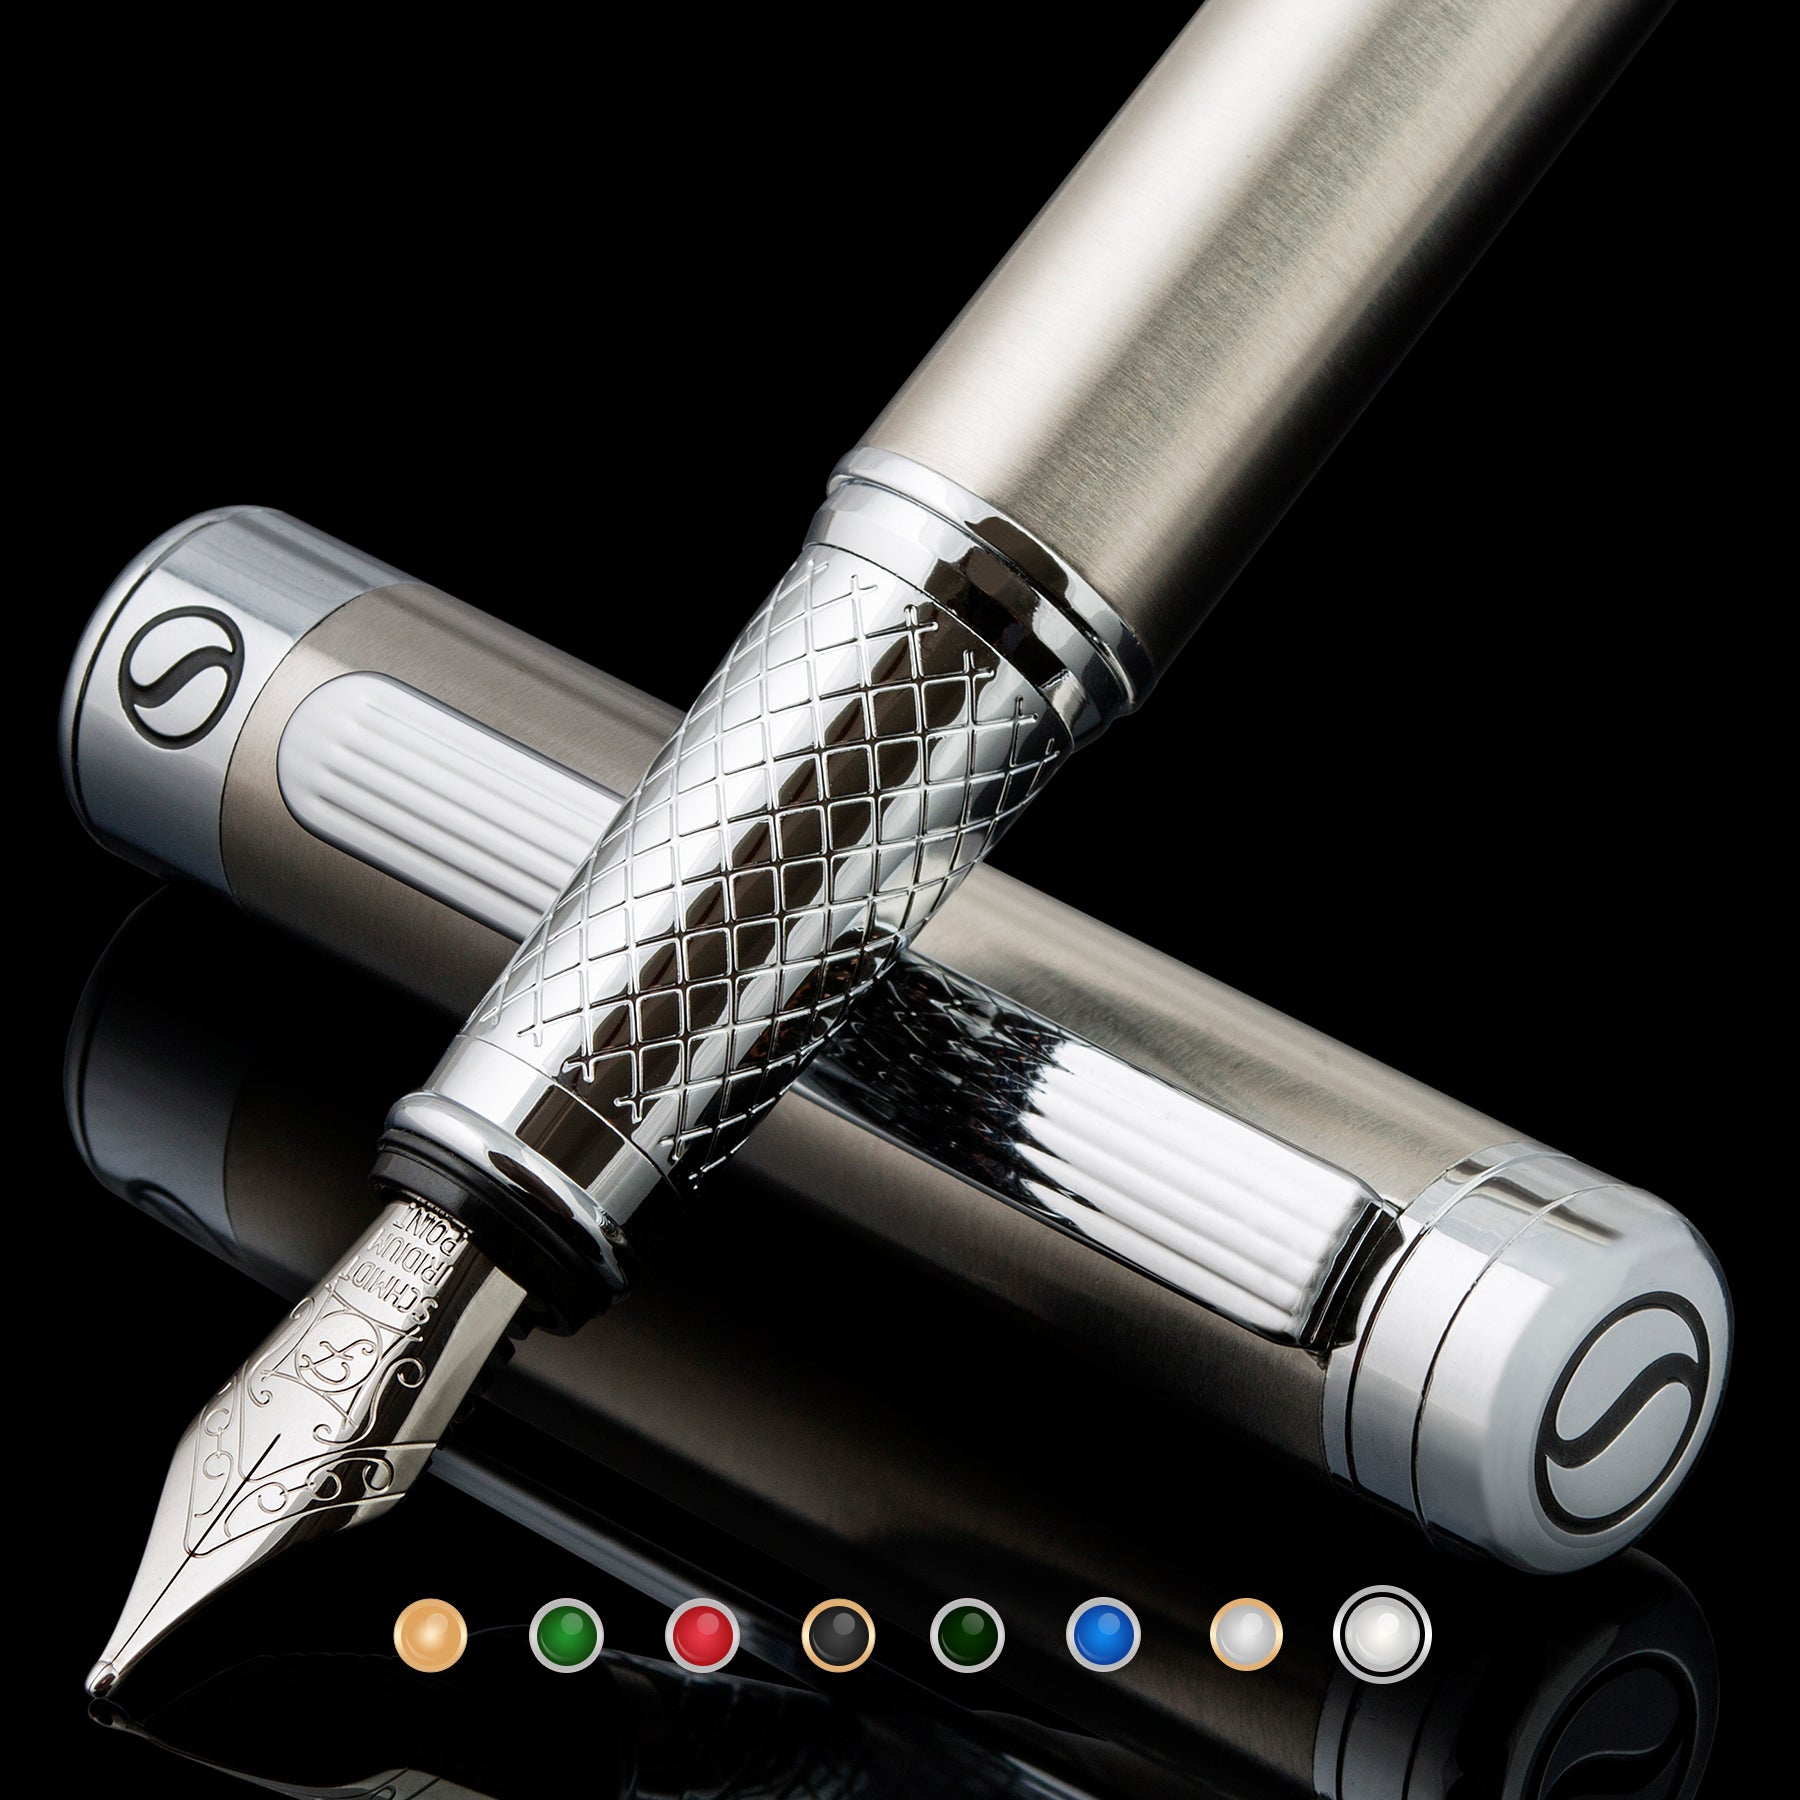 Scriveiner Classic Stainless Steel fountain Pen - Fine Nib